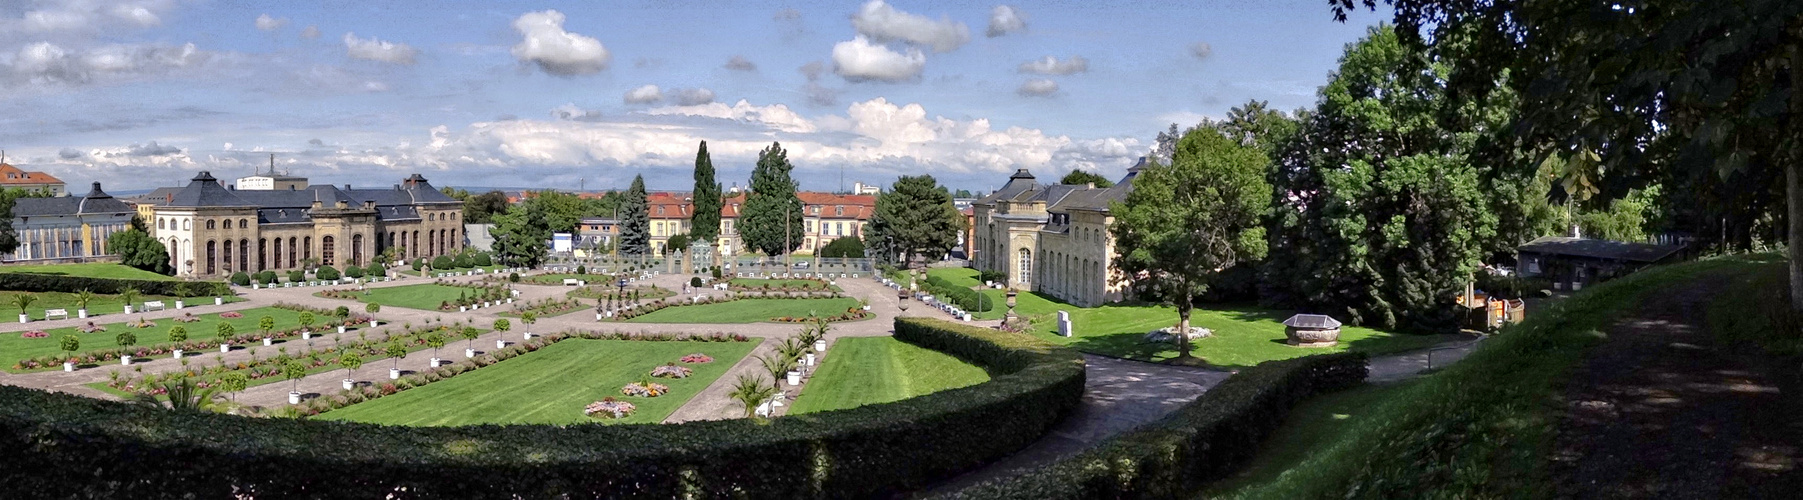 Panorama der Gothaer Orangerie